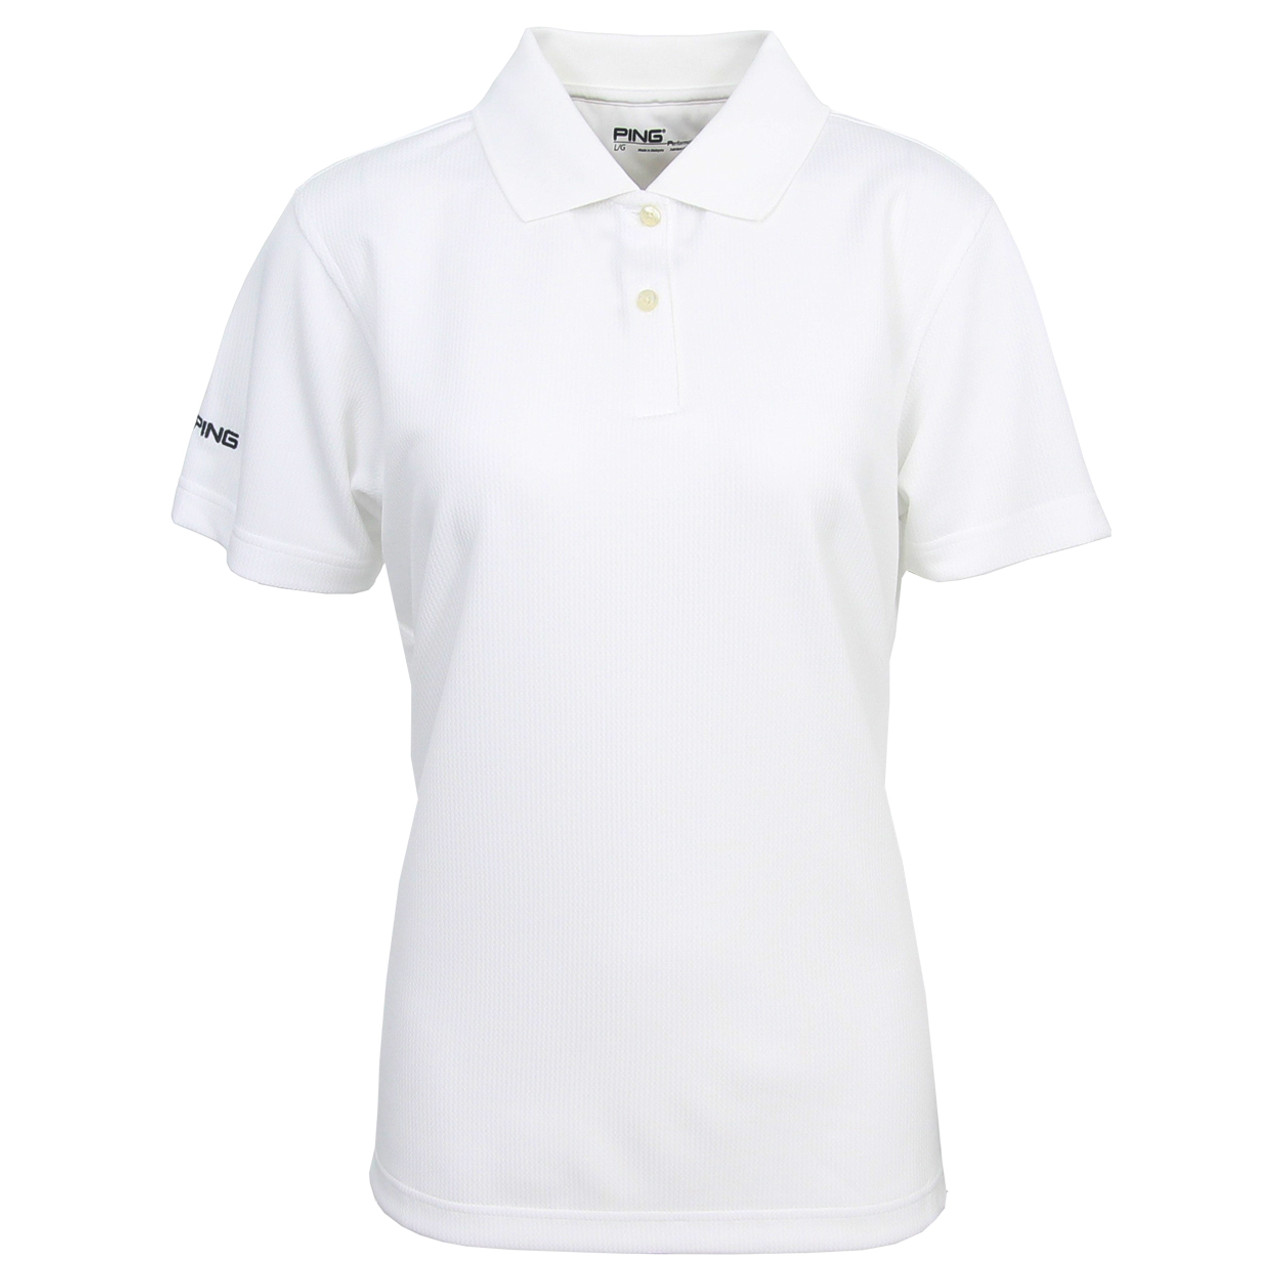 PING Women's Ace Polo Golf Shirt - GolfEtail.com